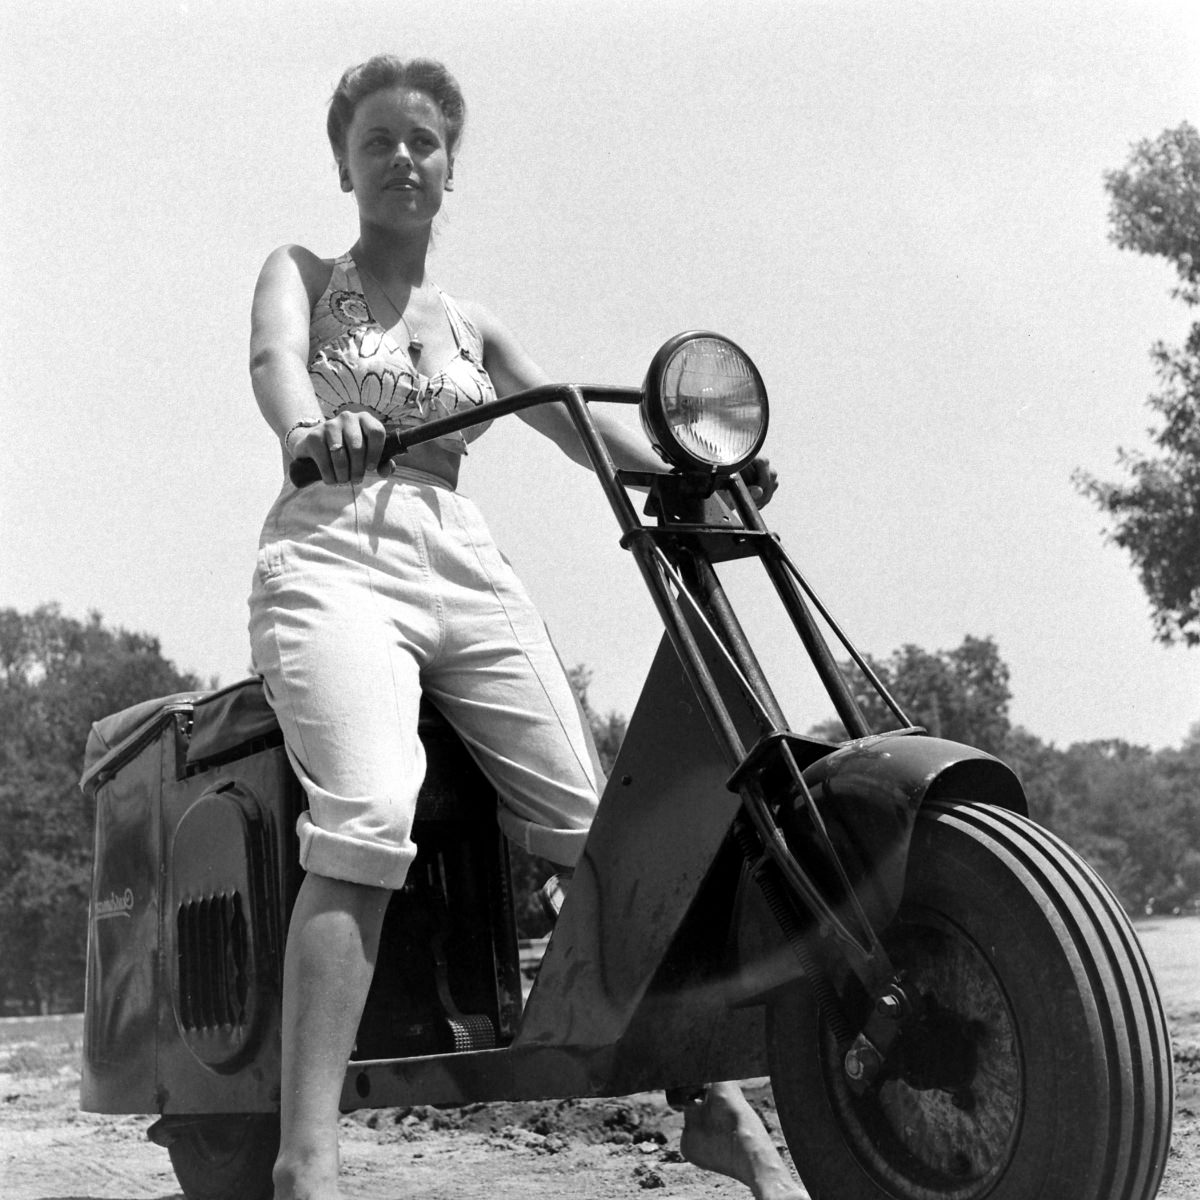 A scooter enthusiast in Nebraska, 1945.